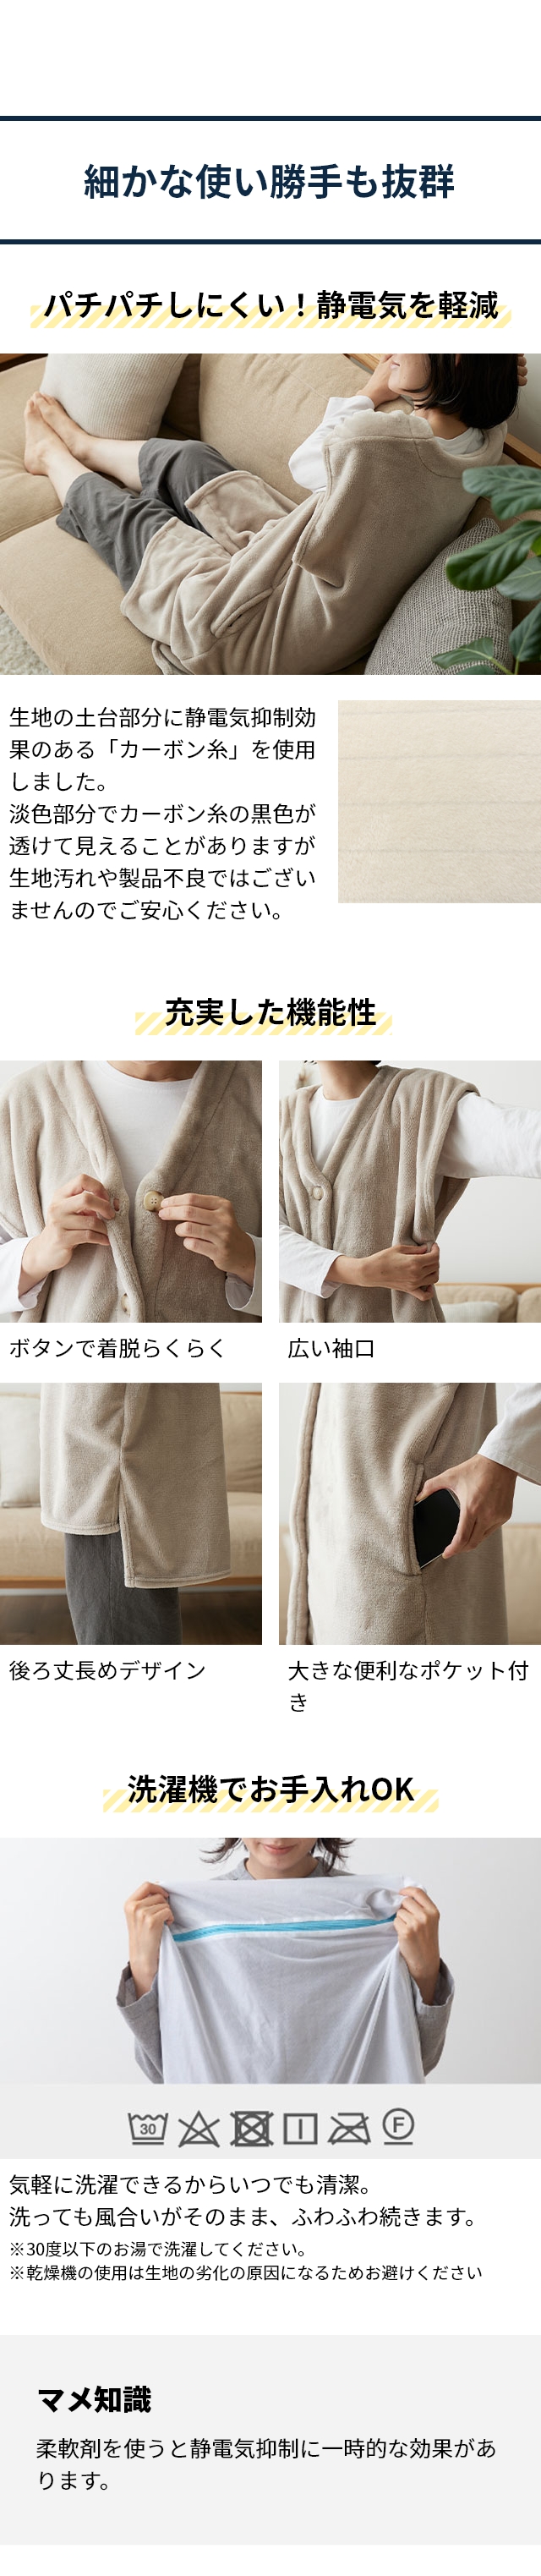 mofua (モフア) プレミアムマイクロファイバー 着る毛布 ロングベストタイプ FJ 着丈90〜110cm